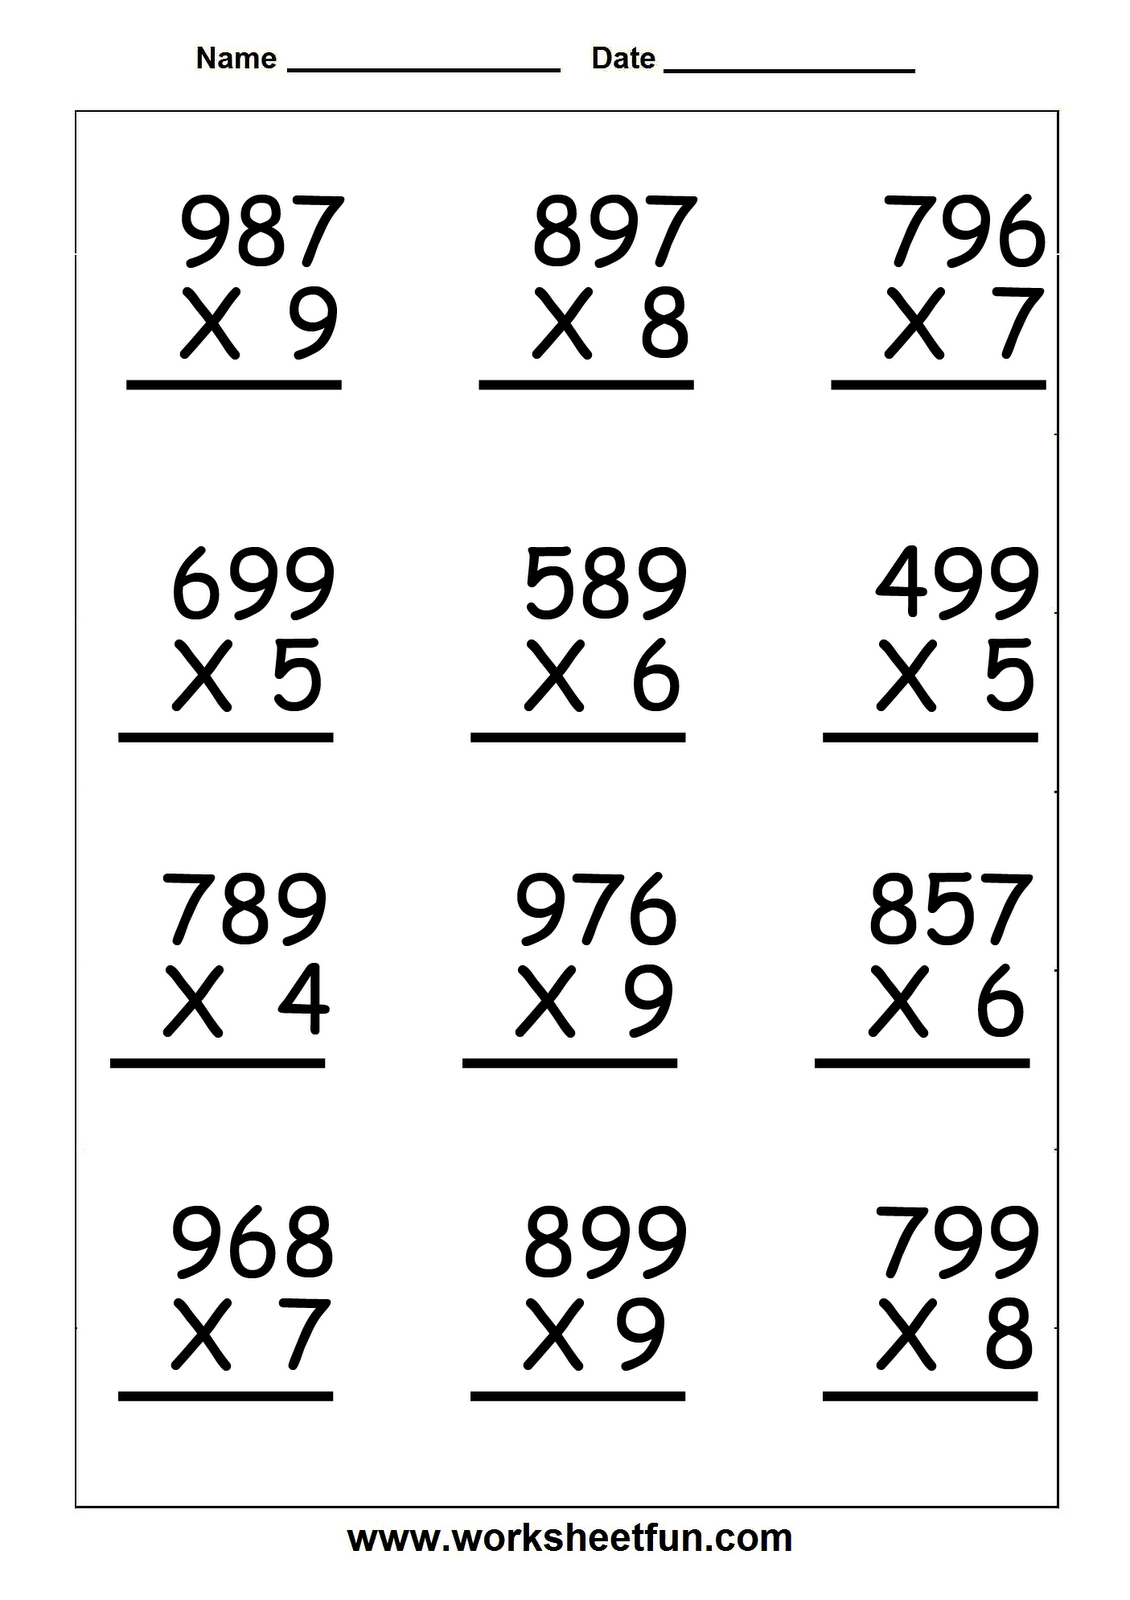 Multiplication Worksheets For 5Th Grade | Worksheetfun - Free - Free Printable Multiplication Worksheets For 4Th Grade